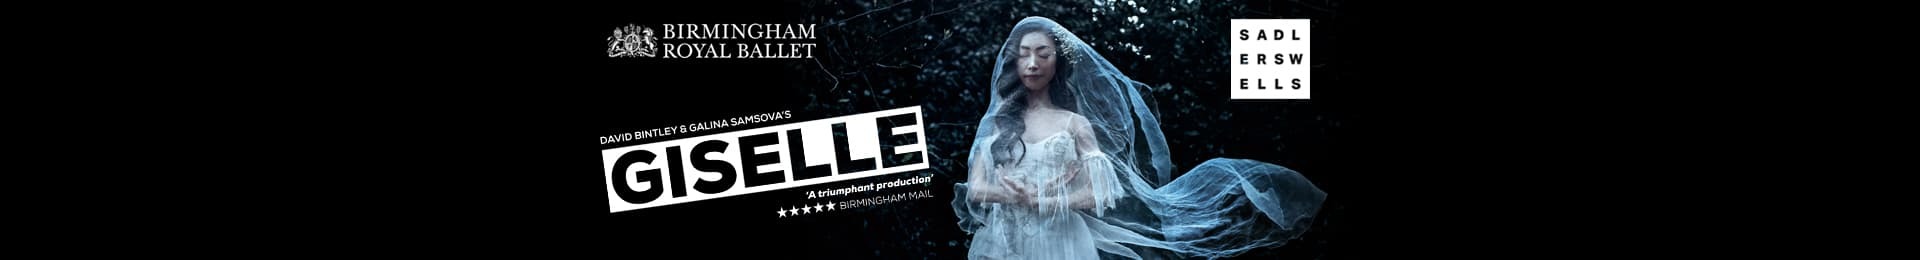 Birmingham Royal Ballet: Giselle banner image